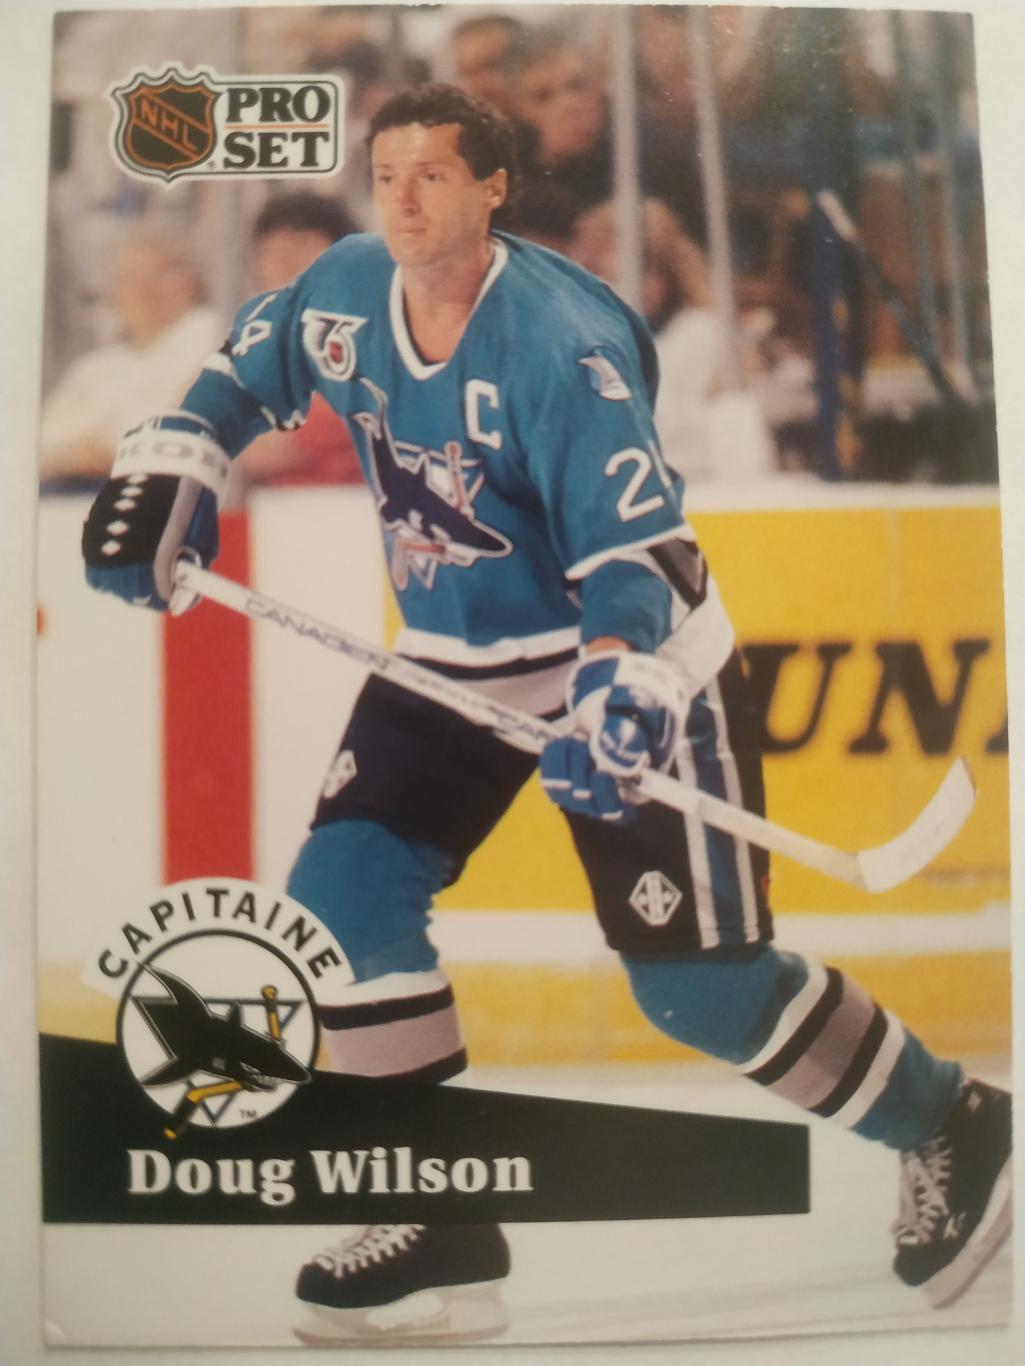 ХОККЕЙ КАРТОЧКА НХЛ PRO SET 1991 NHL DOUG WILSON SAN JOSE SHARKS CAPTAIN #584